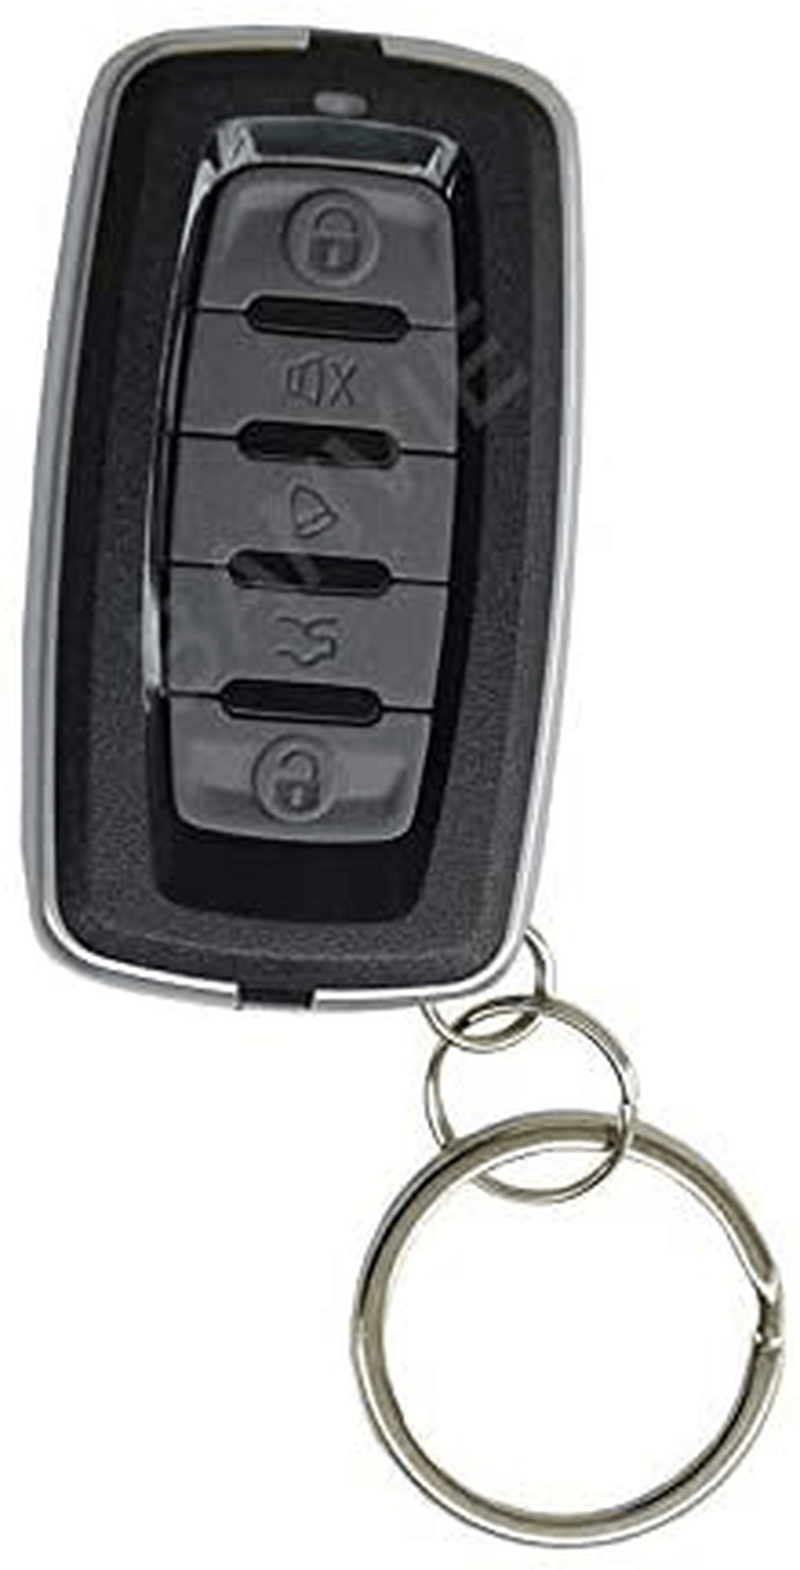 BANVIE Car Security Alarm System with Microwave Sensor & Shock Sensor Vehicles & Parts > Vehicle Parts & Accessories > Vehicle Safety & Security > Vehicle Alarms & Locks > Automotive Alarm Systems BANVIE   